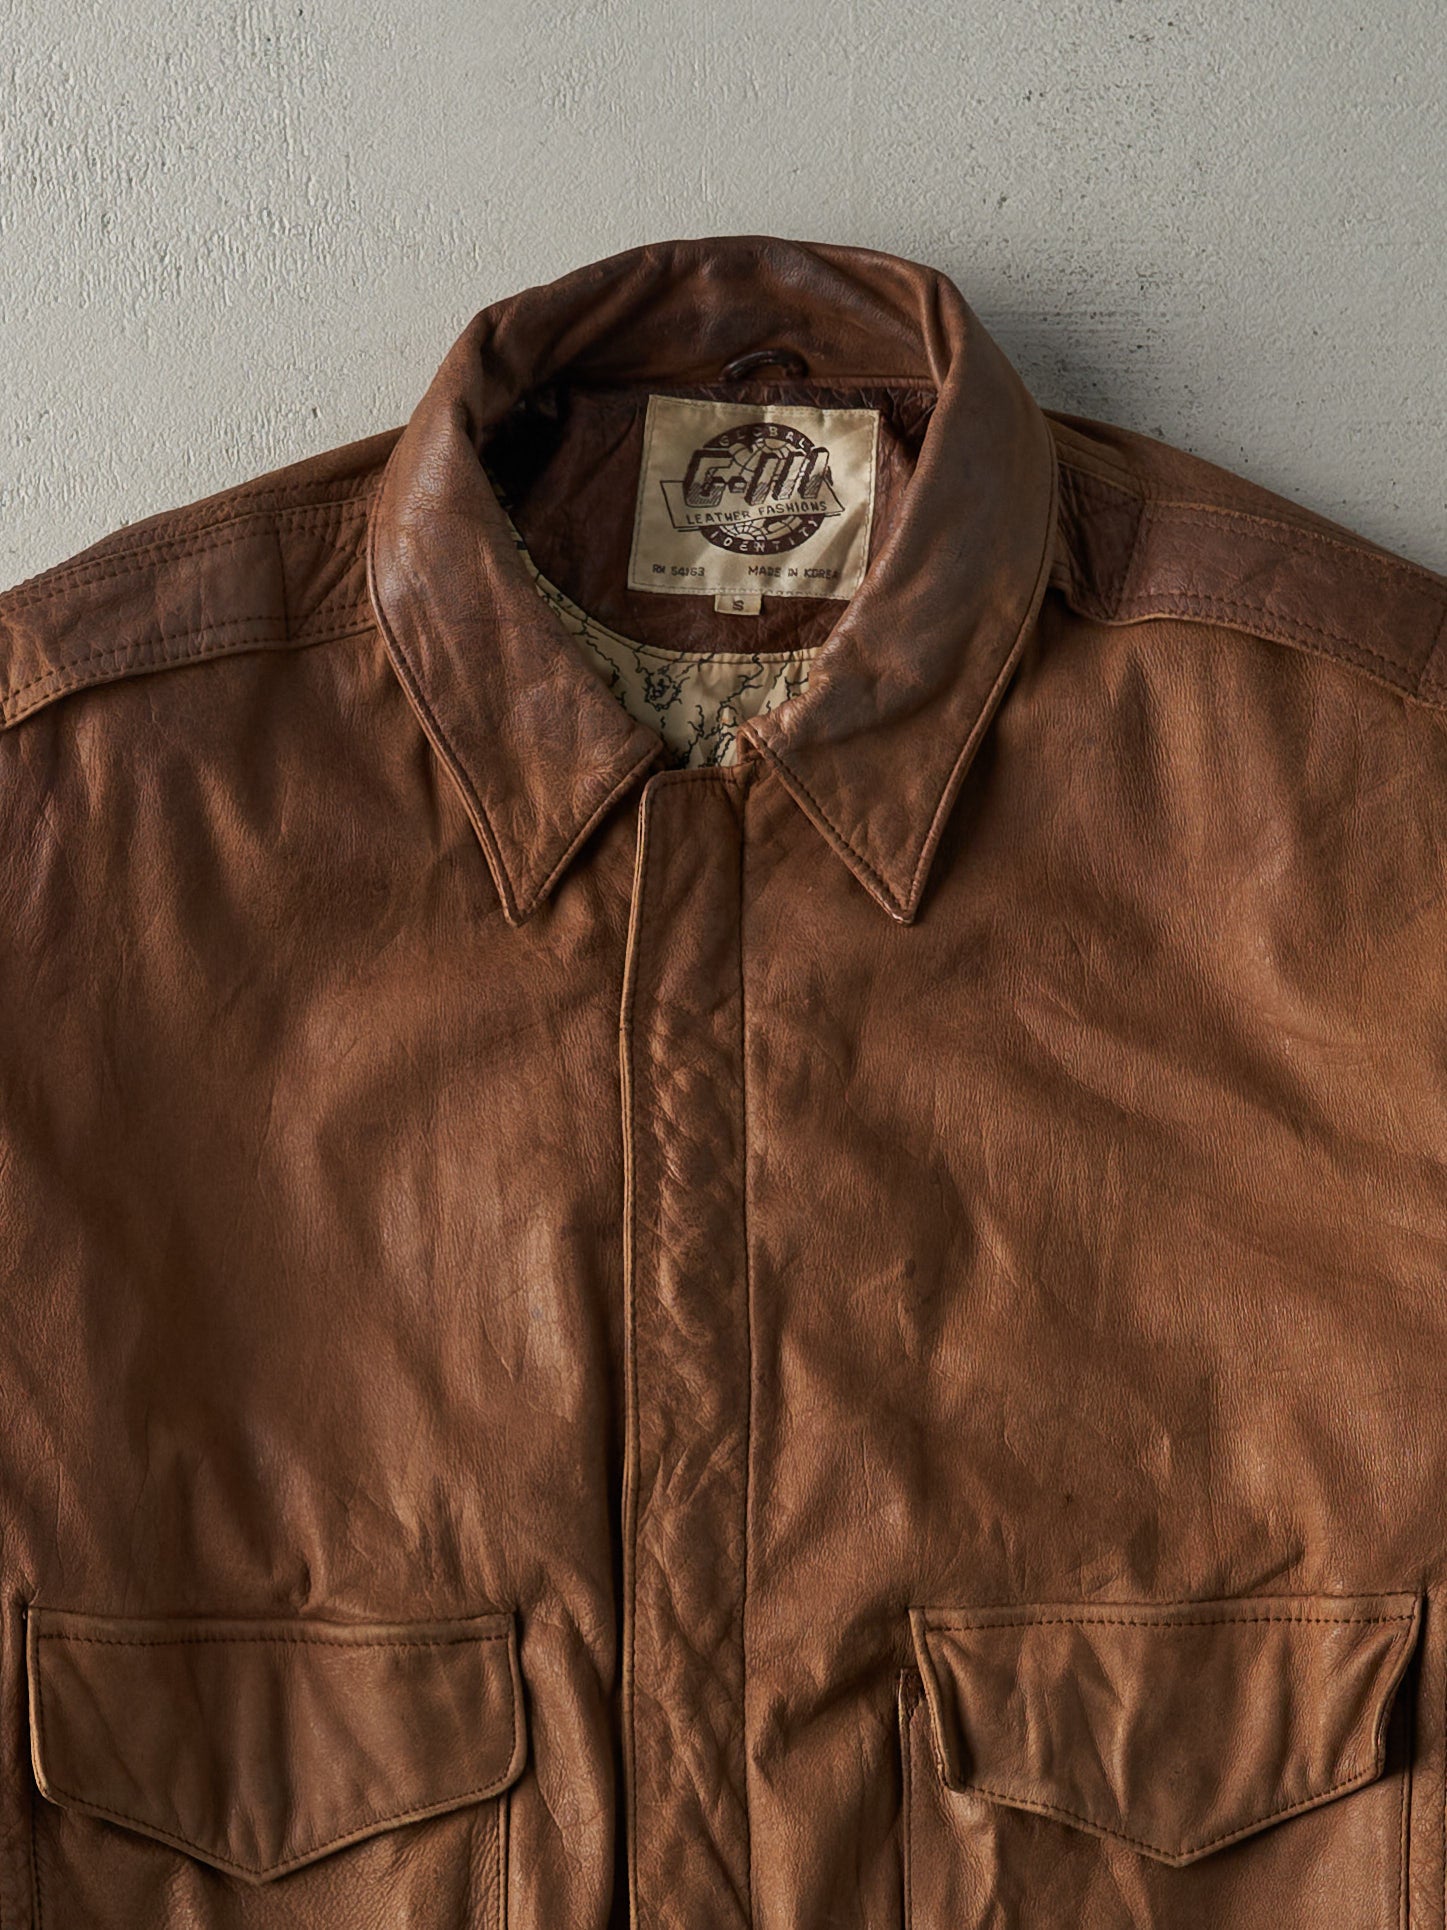 Vintage 80s Brown Global Identity Leather Jacket (M)